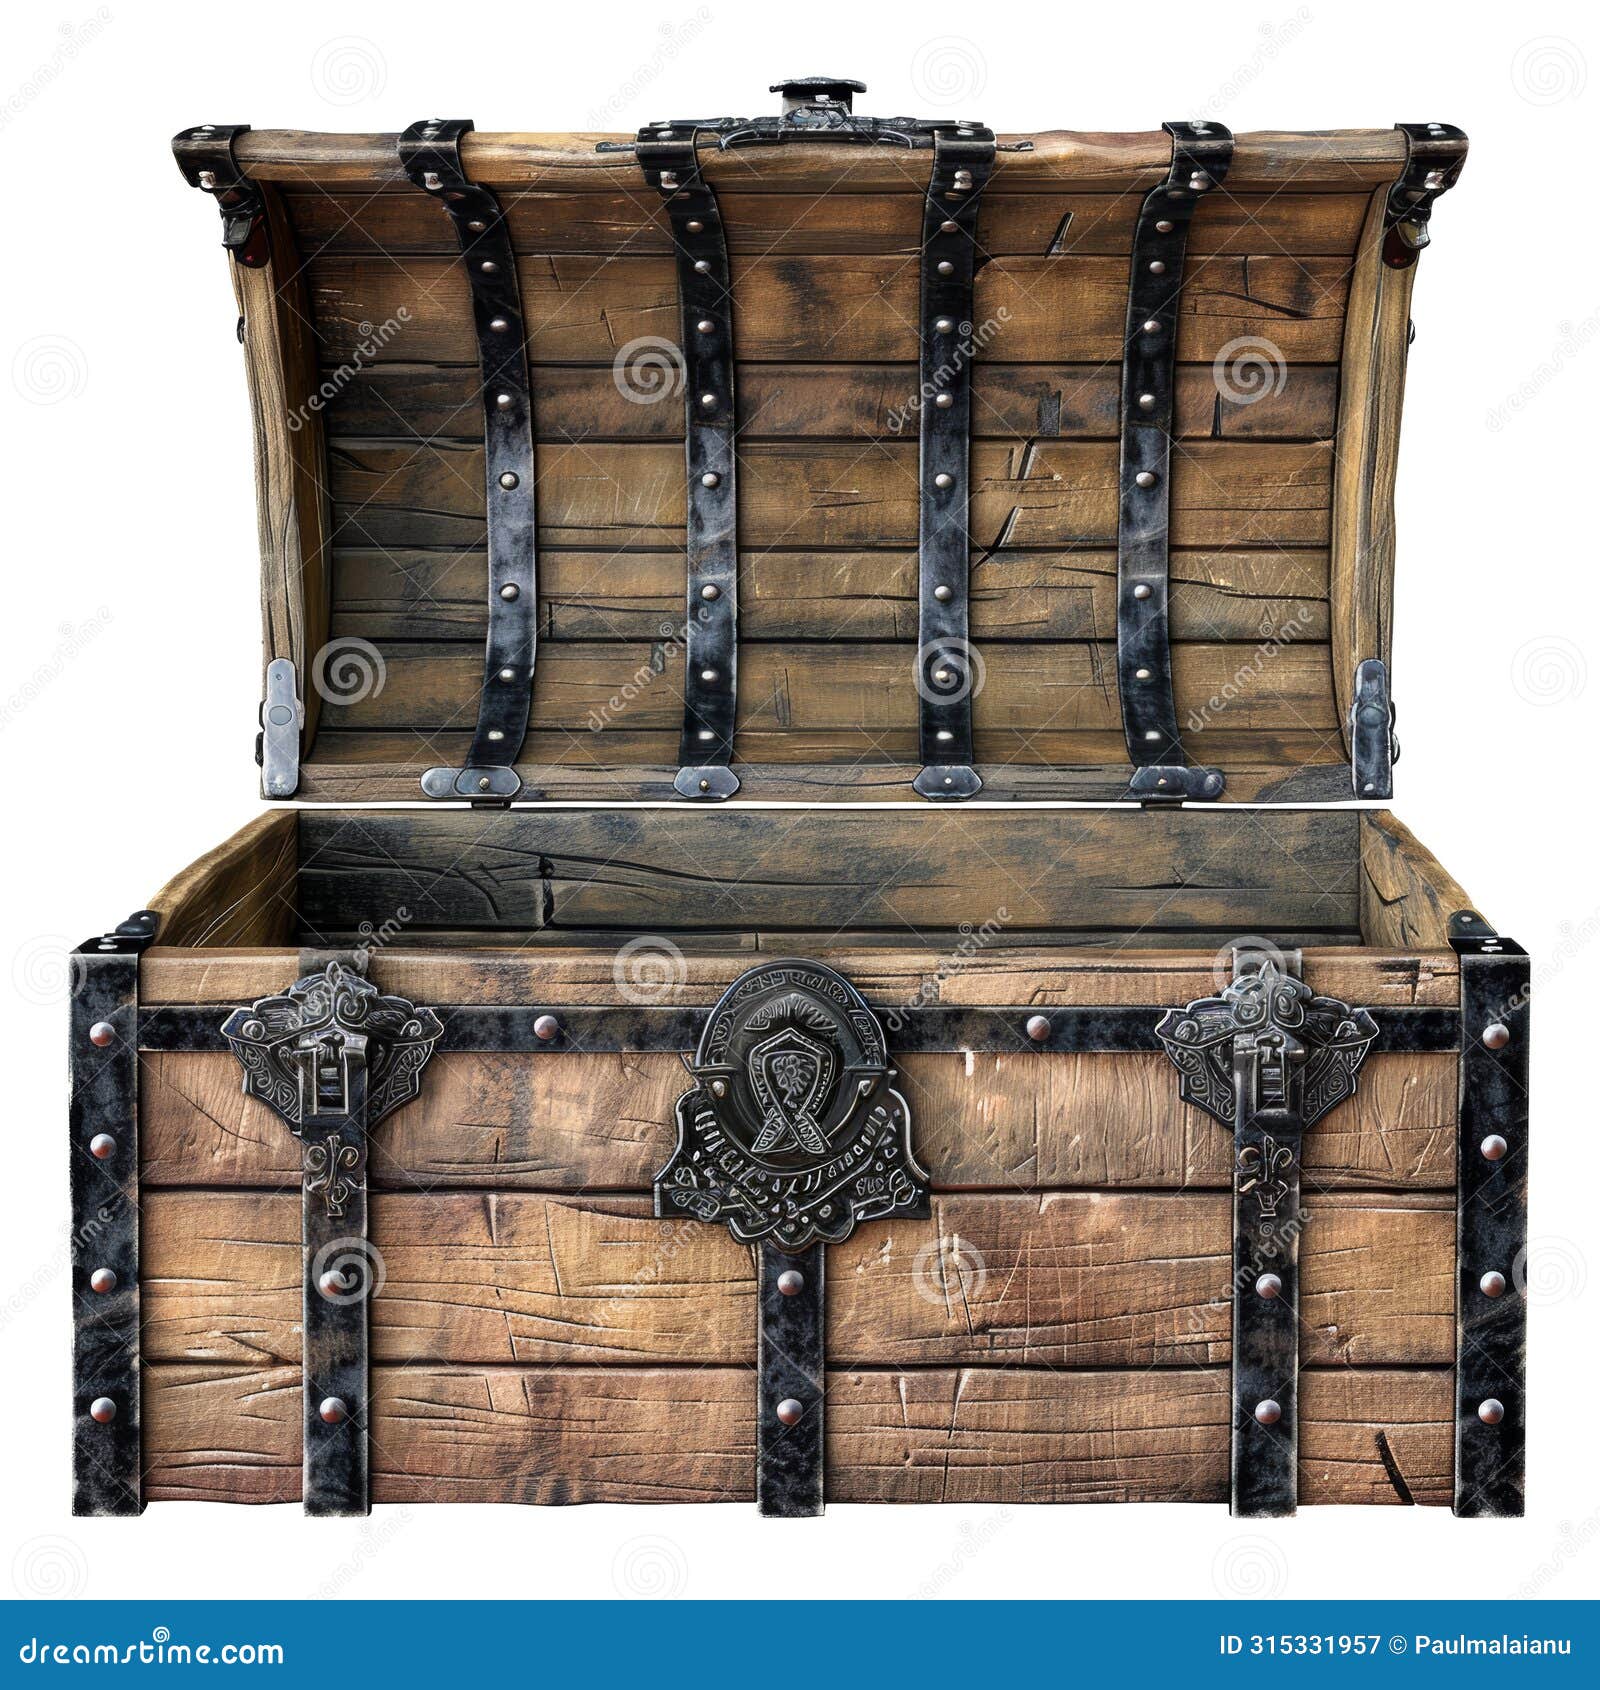 mediaeval treasure chest  on transparent background.